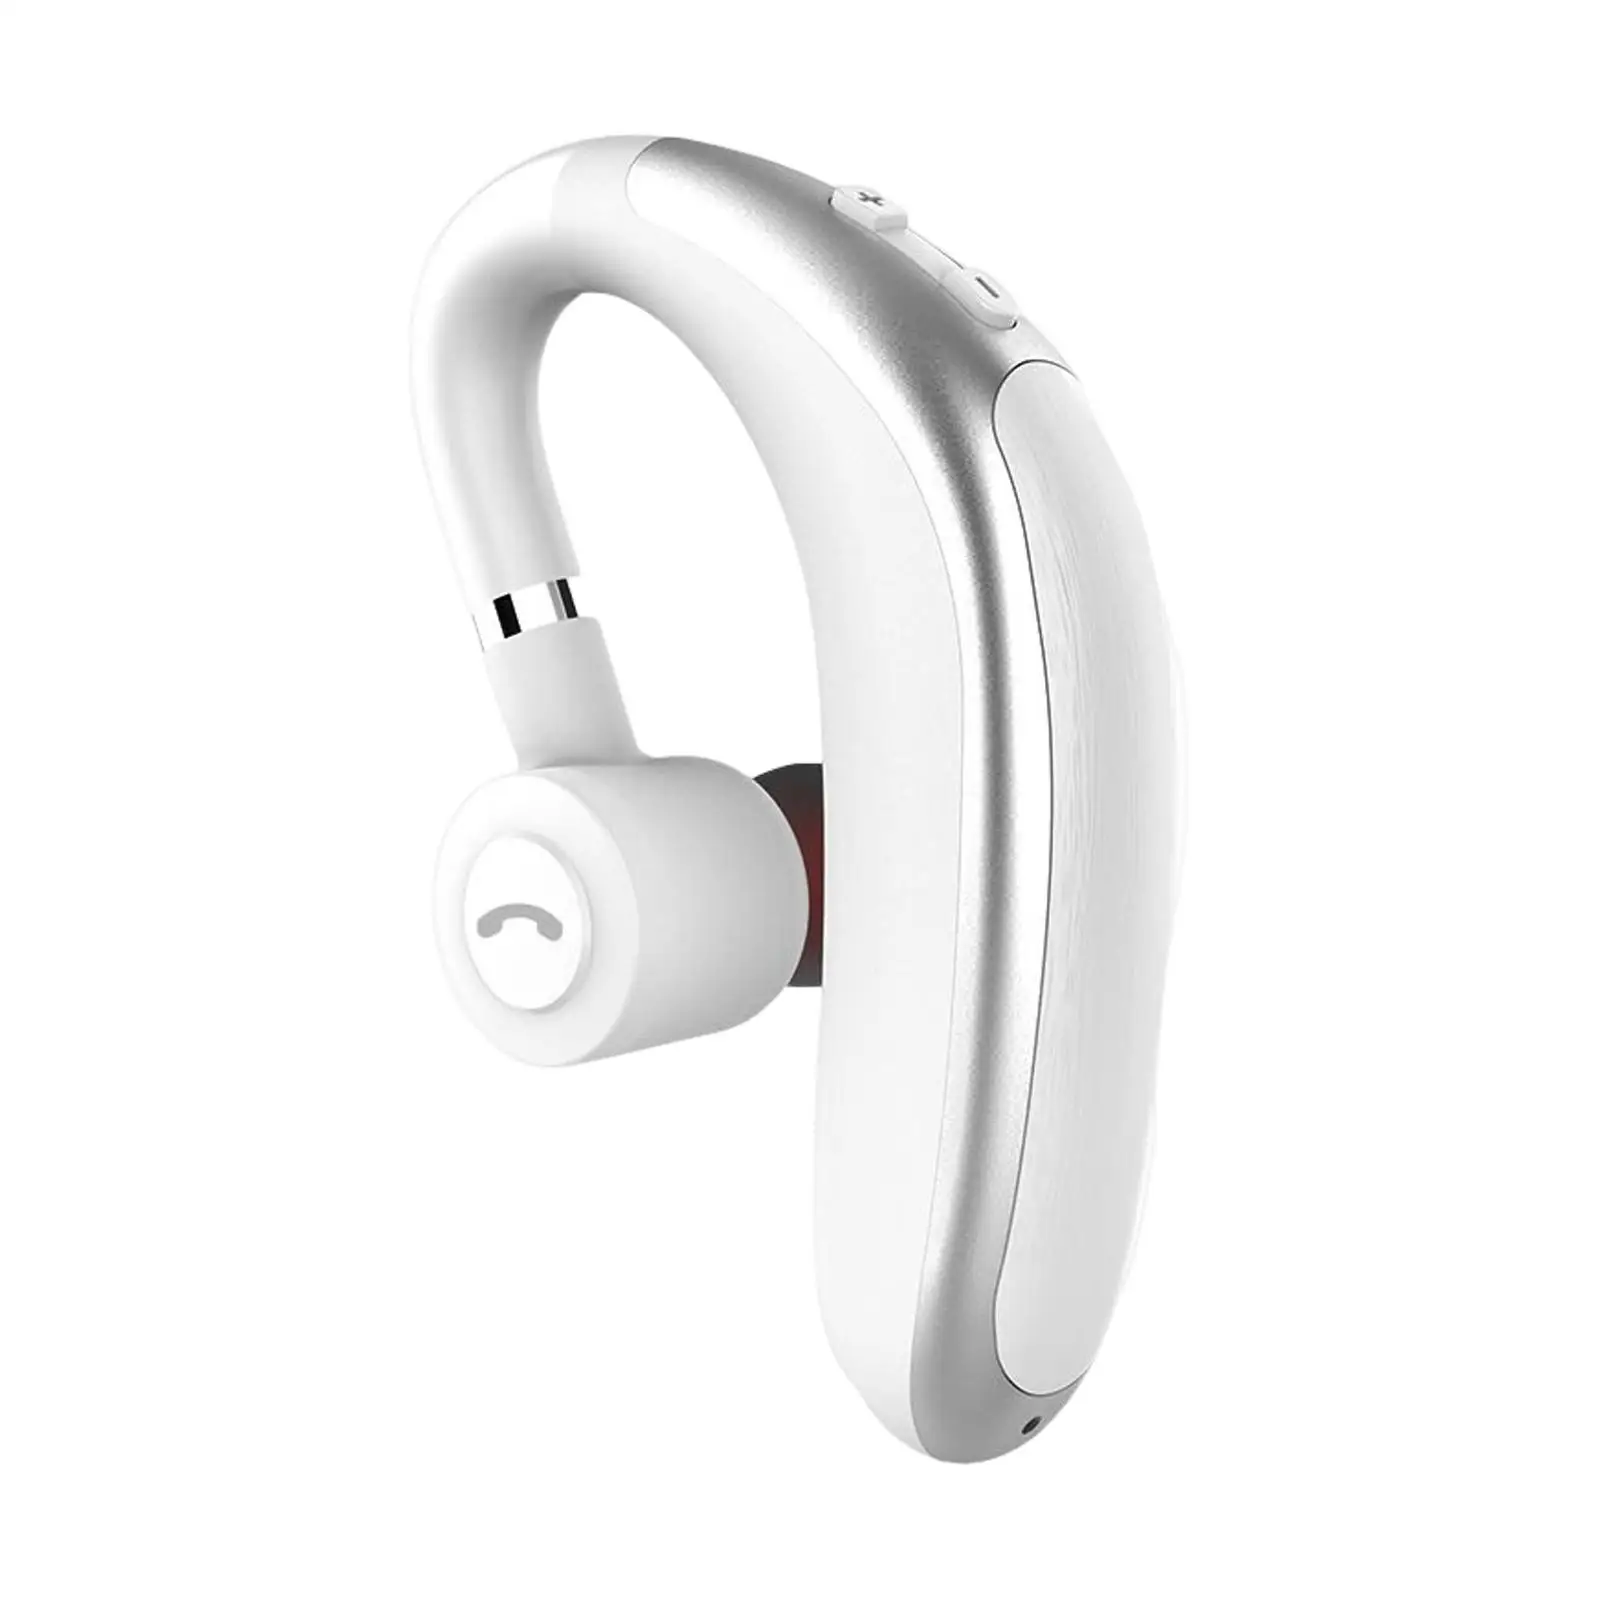 Single Ear Hook Bluetooth Headset Noise Cancelling Stereo Lightweight Portable Earphone in Ear Earbud for Driving Office Sports